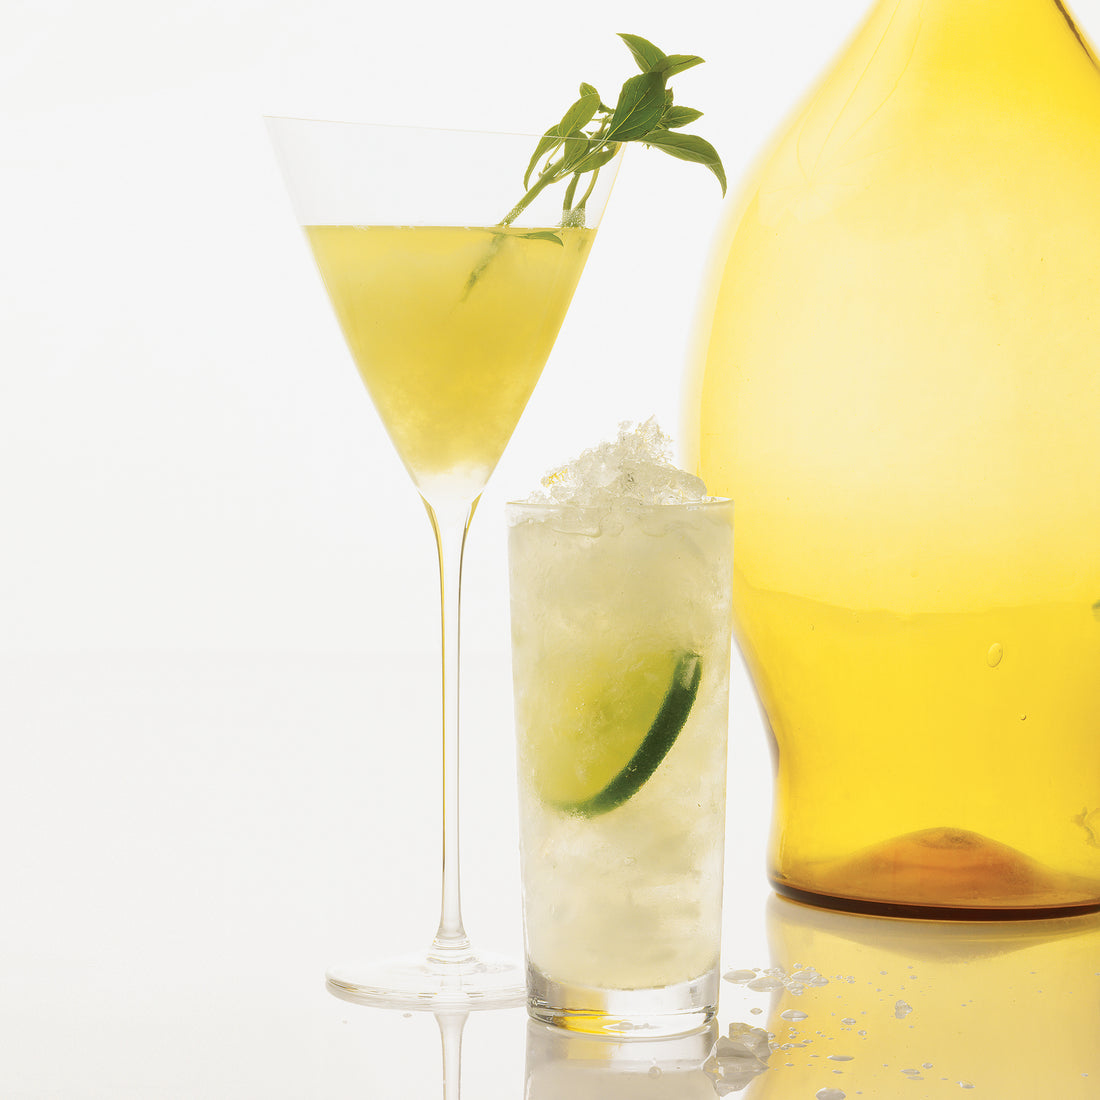 lemon-basil-martini||_Prosecco_in_a_champagne_coupe||lemon-julep-recipe||strawberry-basil-bourbon-lemonade-recipe||vodka_ade||strawberry-lemon-mojitos-cocktails||lemon-cocktail||Lemons, Make These 8 Cocktails (Recipes)